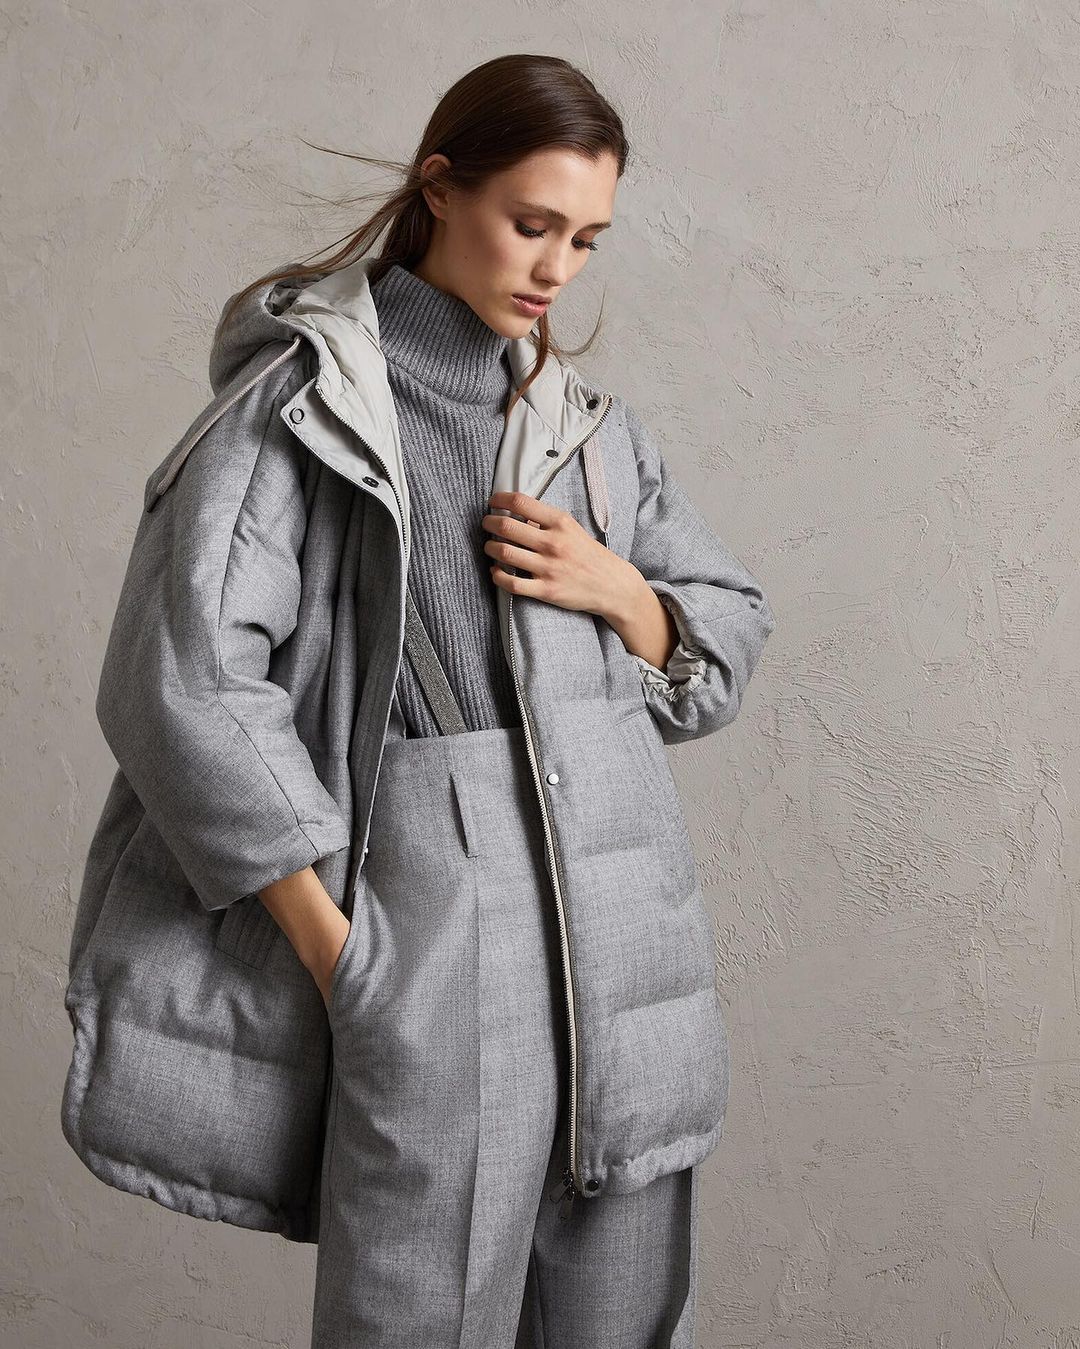 10 Most Fashionable Winter Coats ...